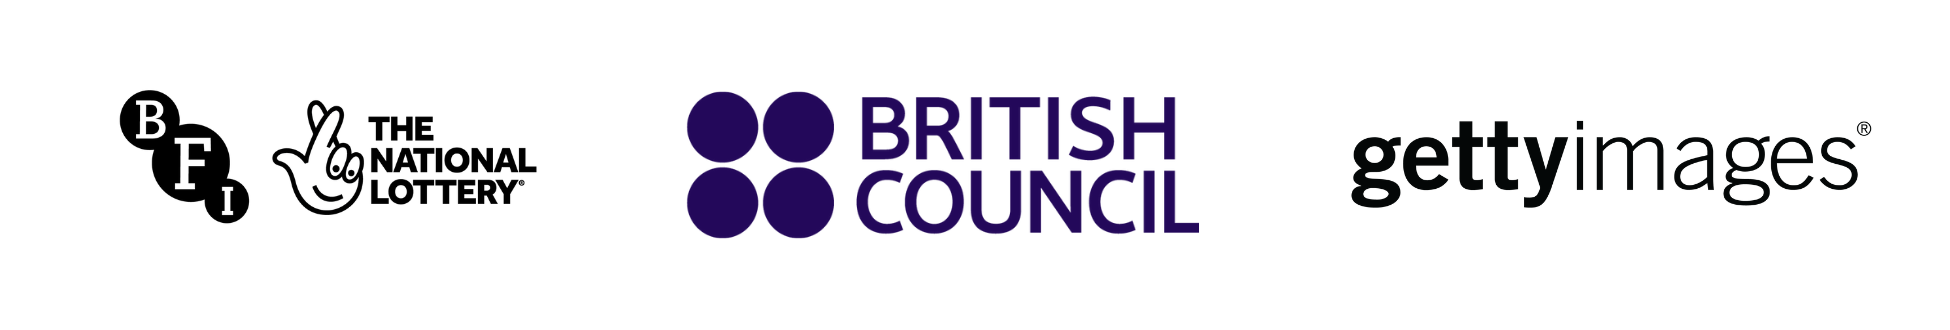 BFI logo, British Council logo, Getty Images logo